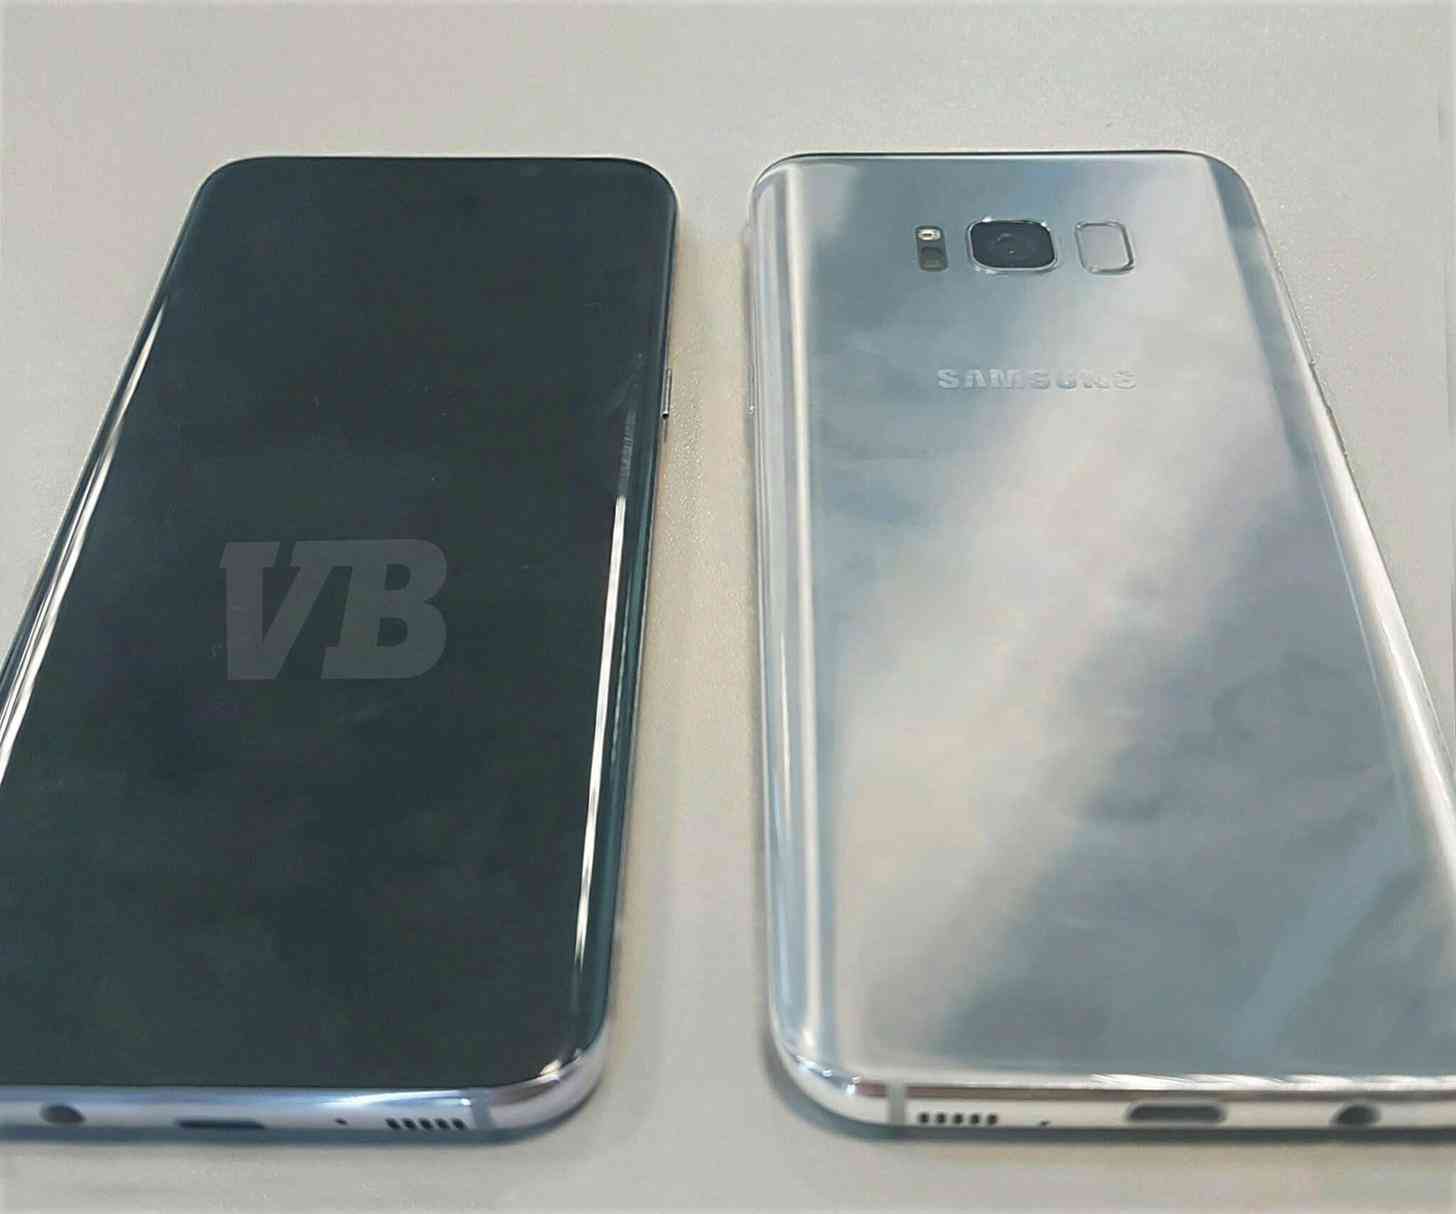 Samsung Galaxy S8 photo leak